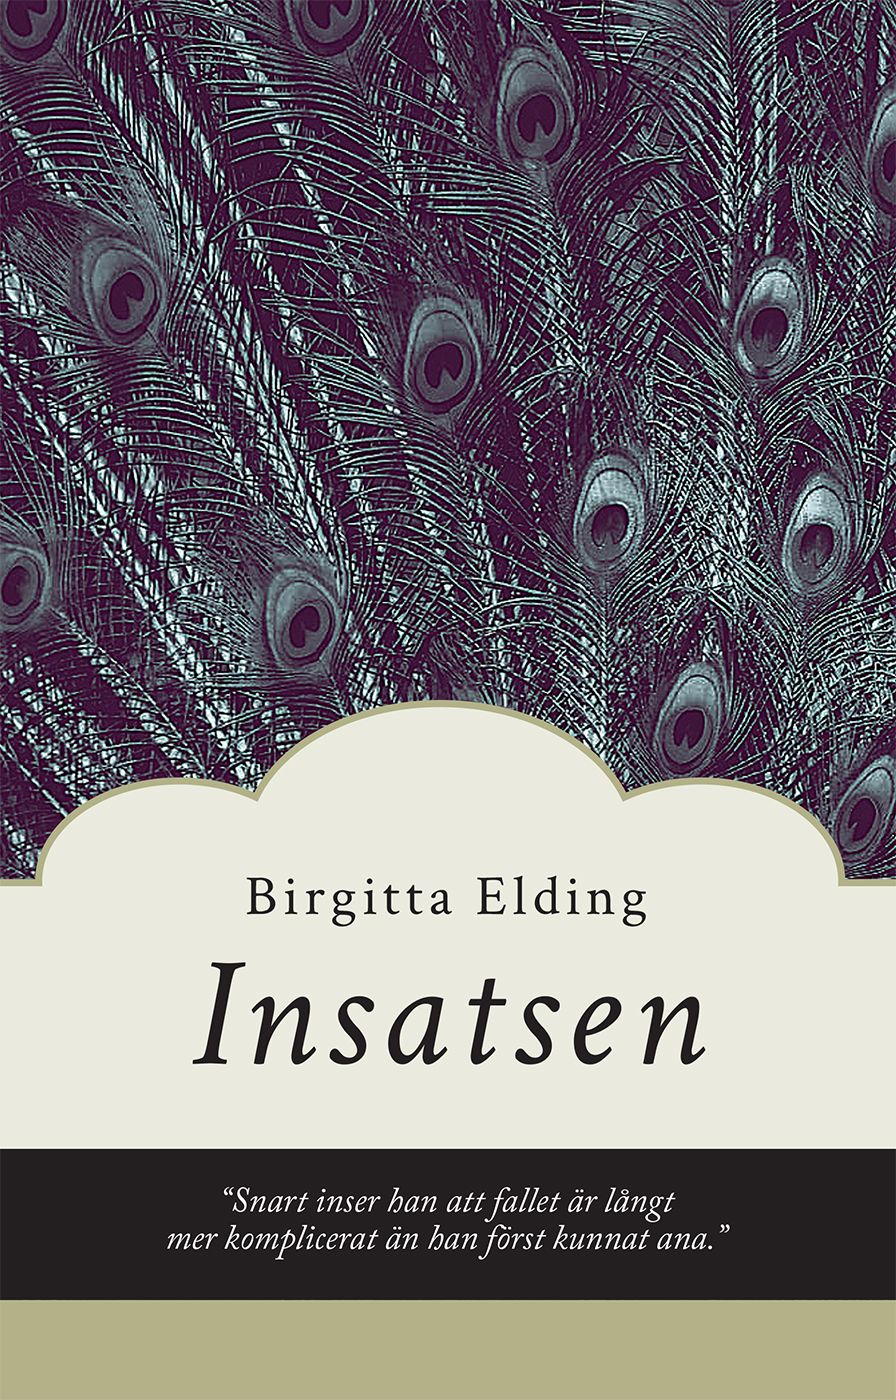 Insatsen, e-bok av Birgitta Elding